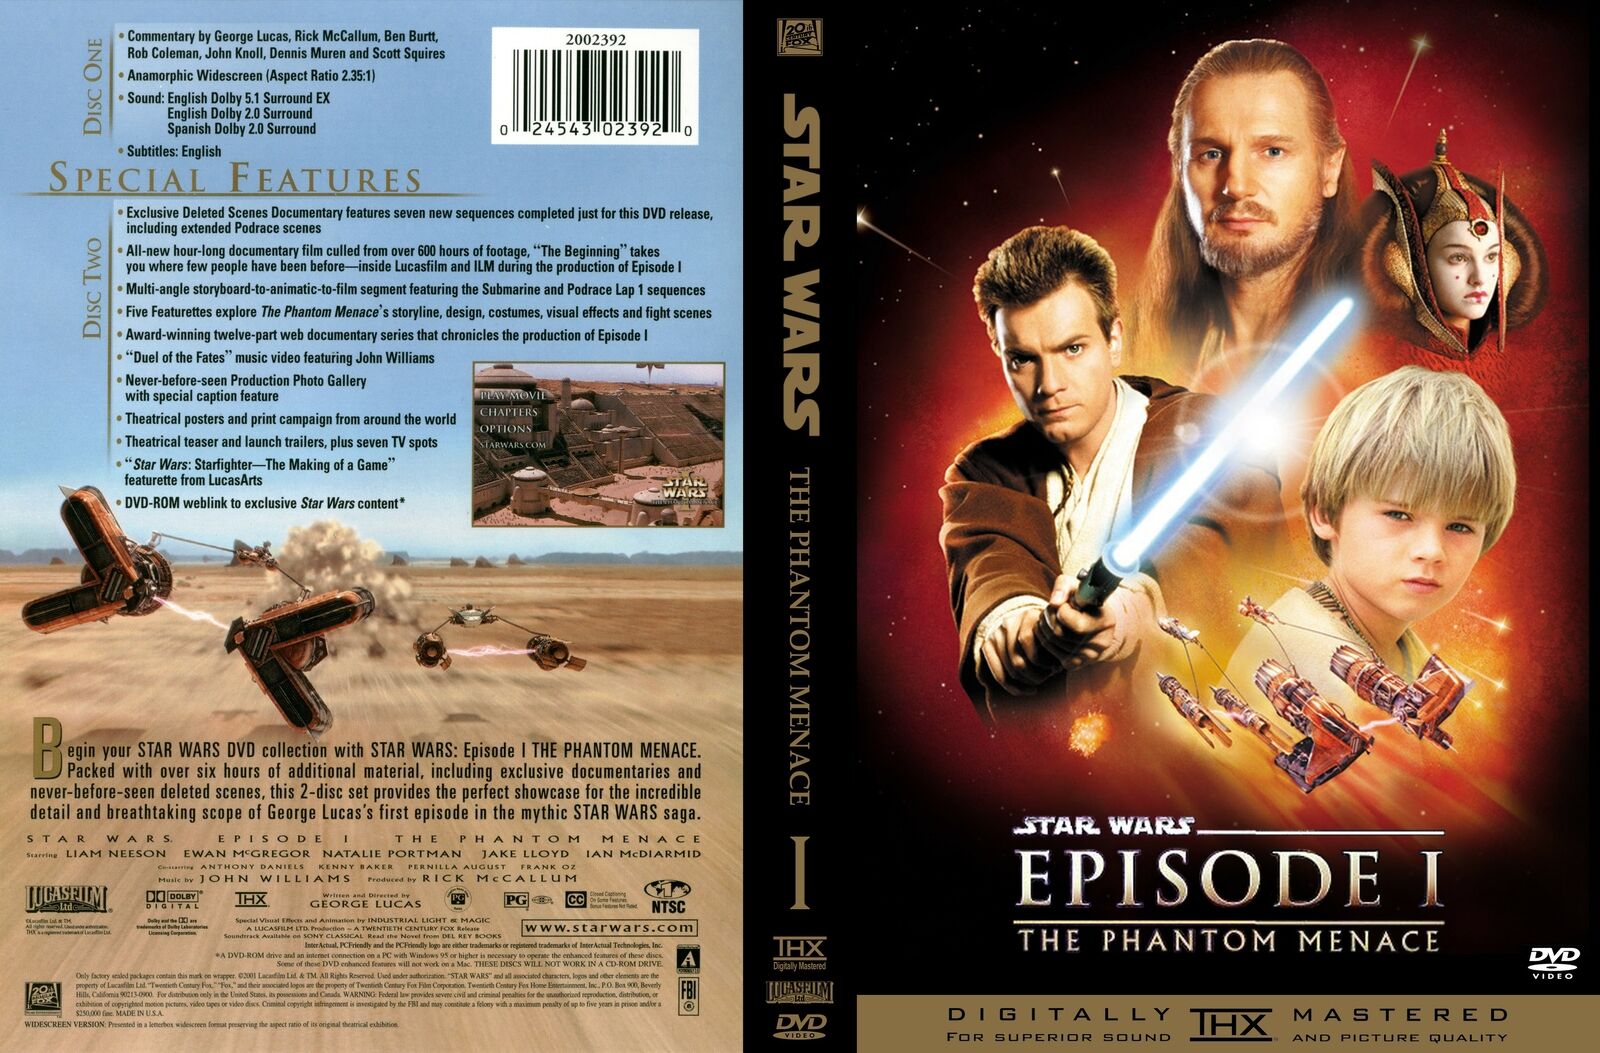 Wars Episode I The Menace (DVD, 2001, 2-Discs Liam Neeson) 24543023913 eBay